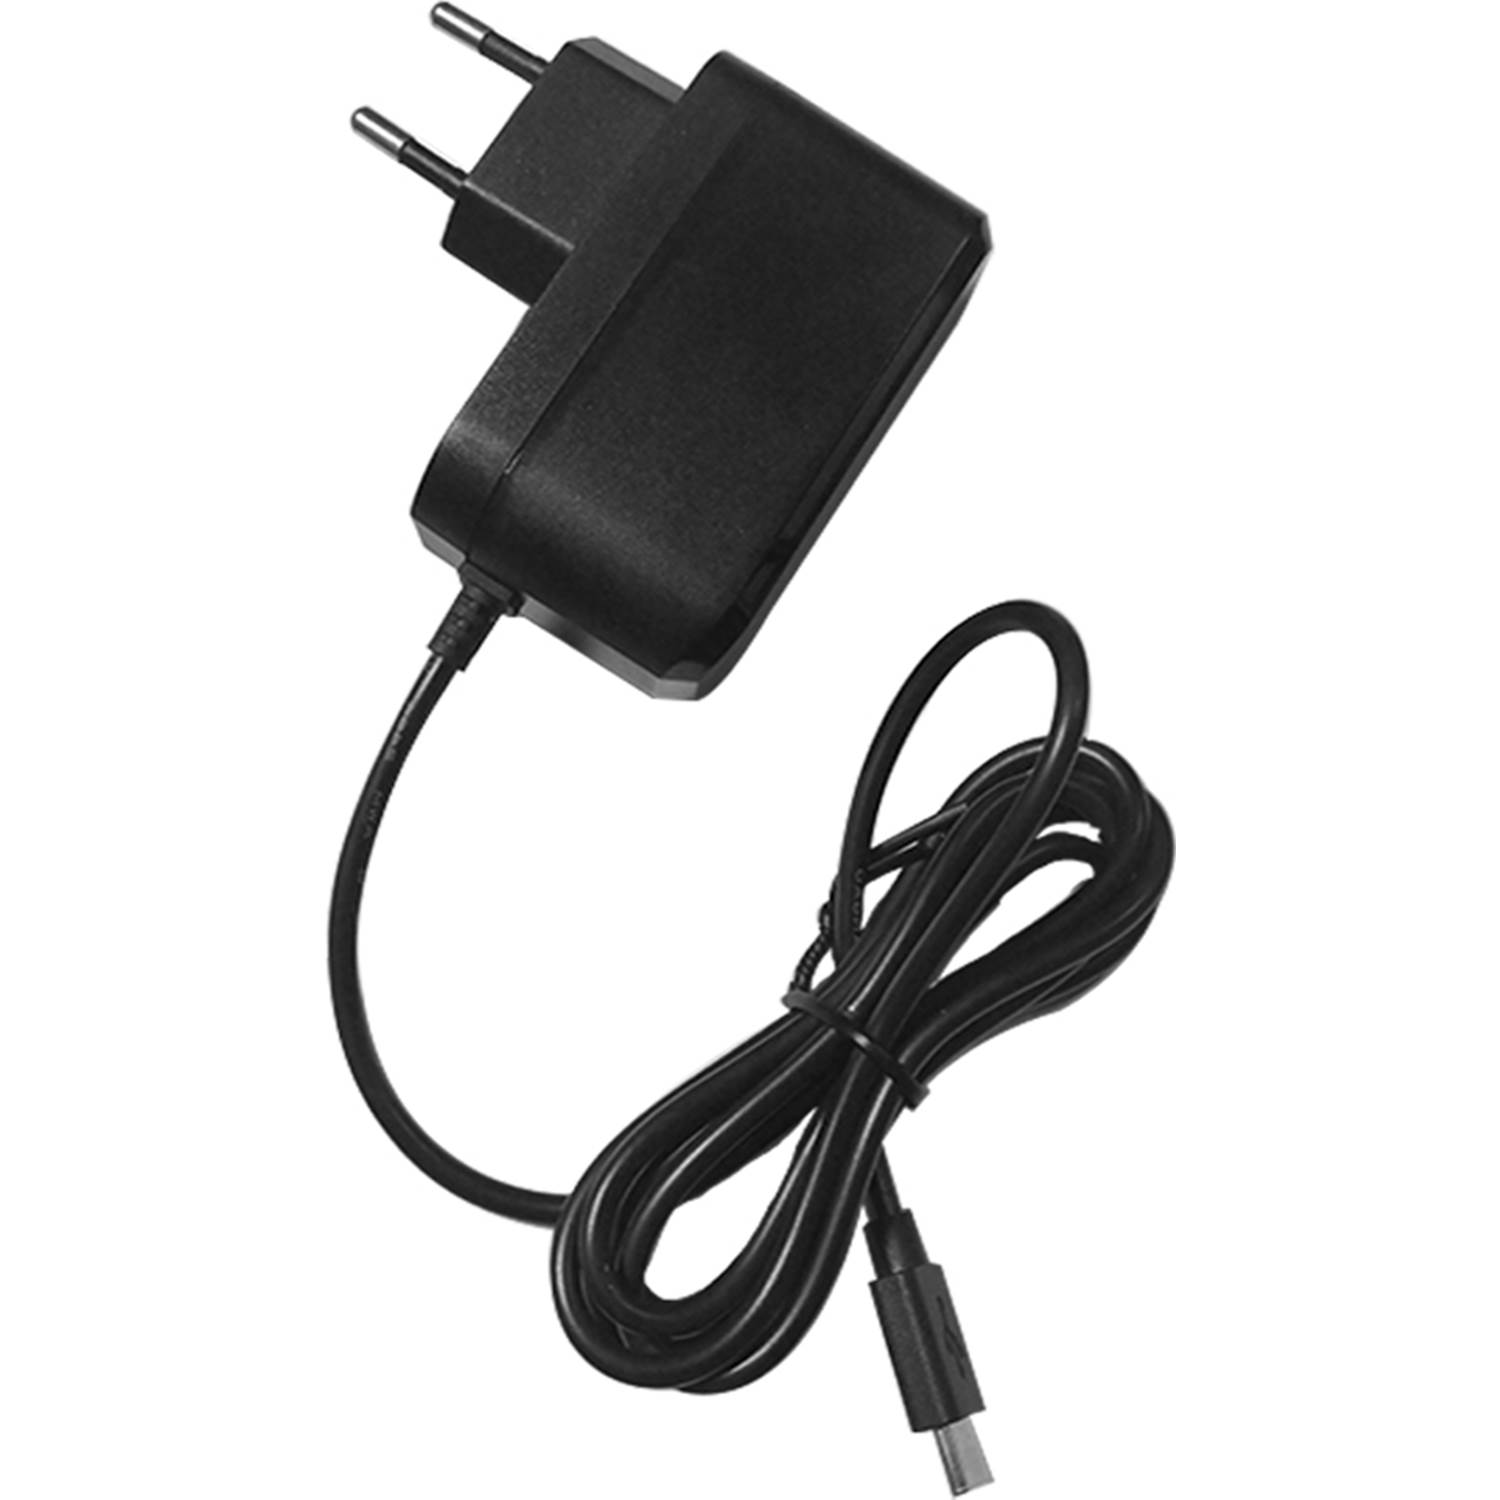 Elvita charging adapter for CFT1150V